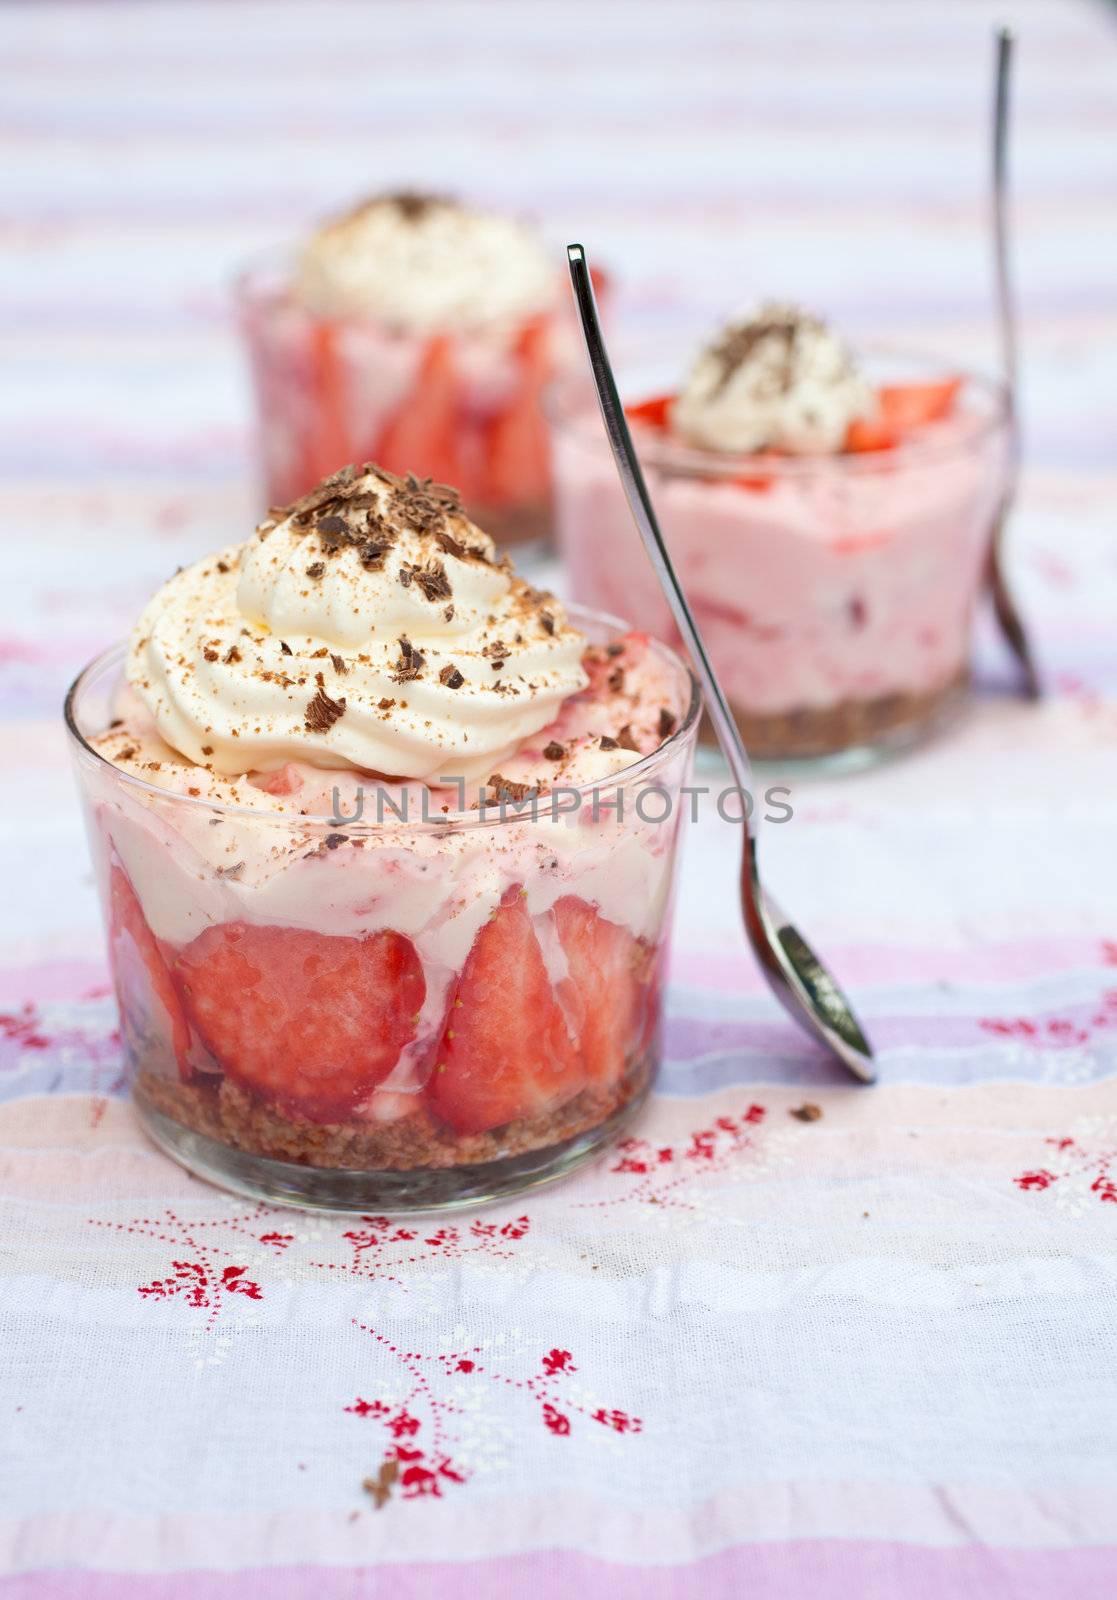 Delicious dessert with strawberries, cream and mascarpone